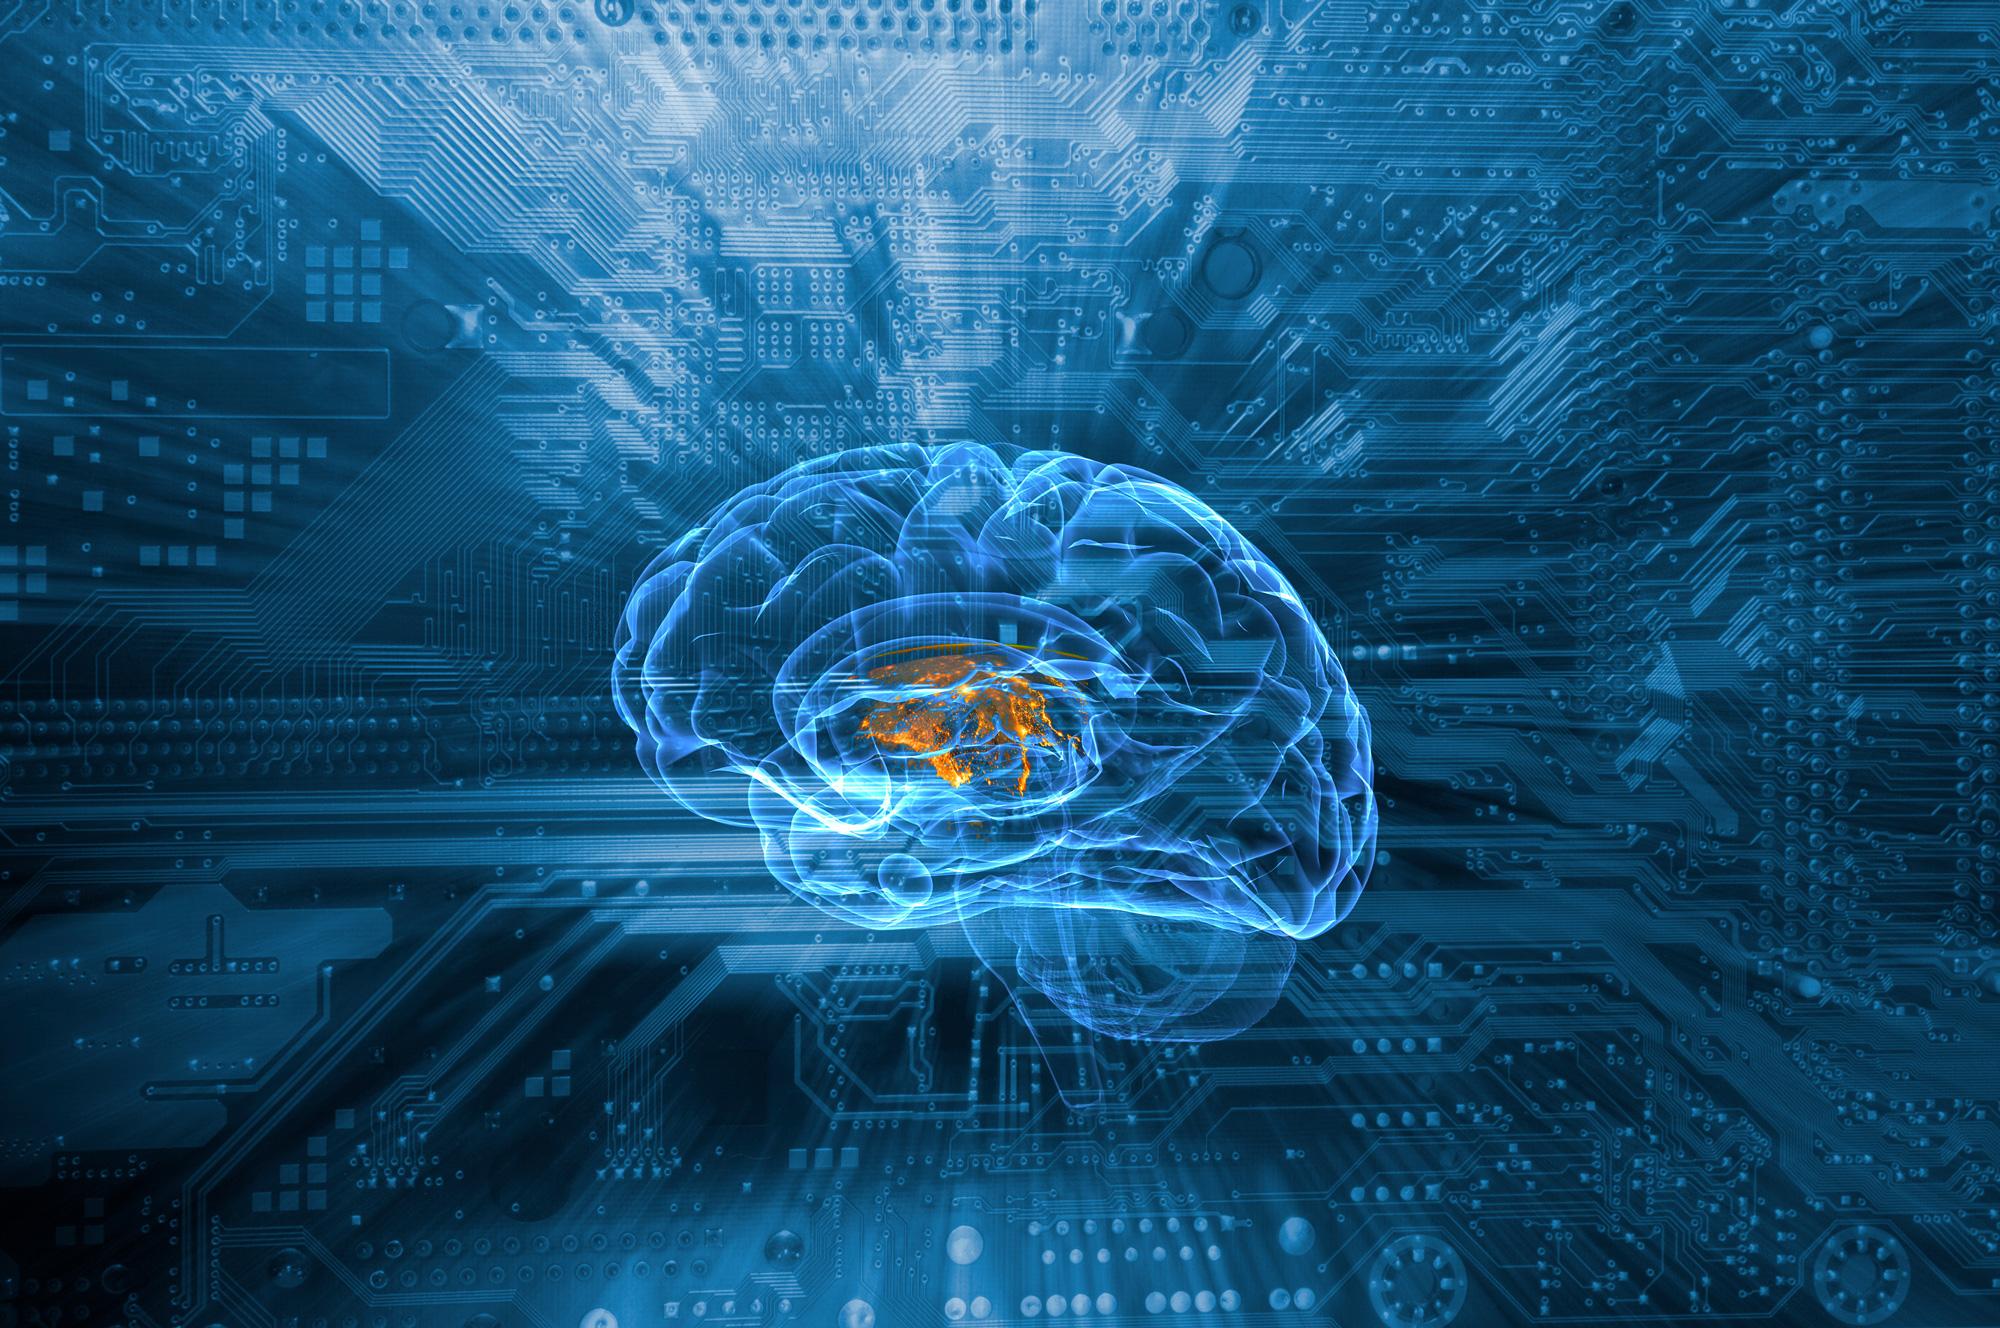 human brain with technology/circuit overlay